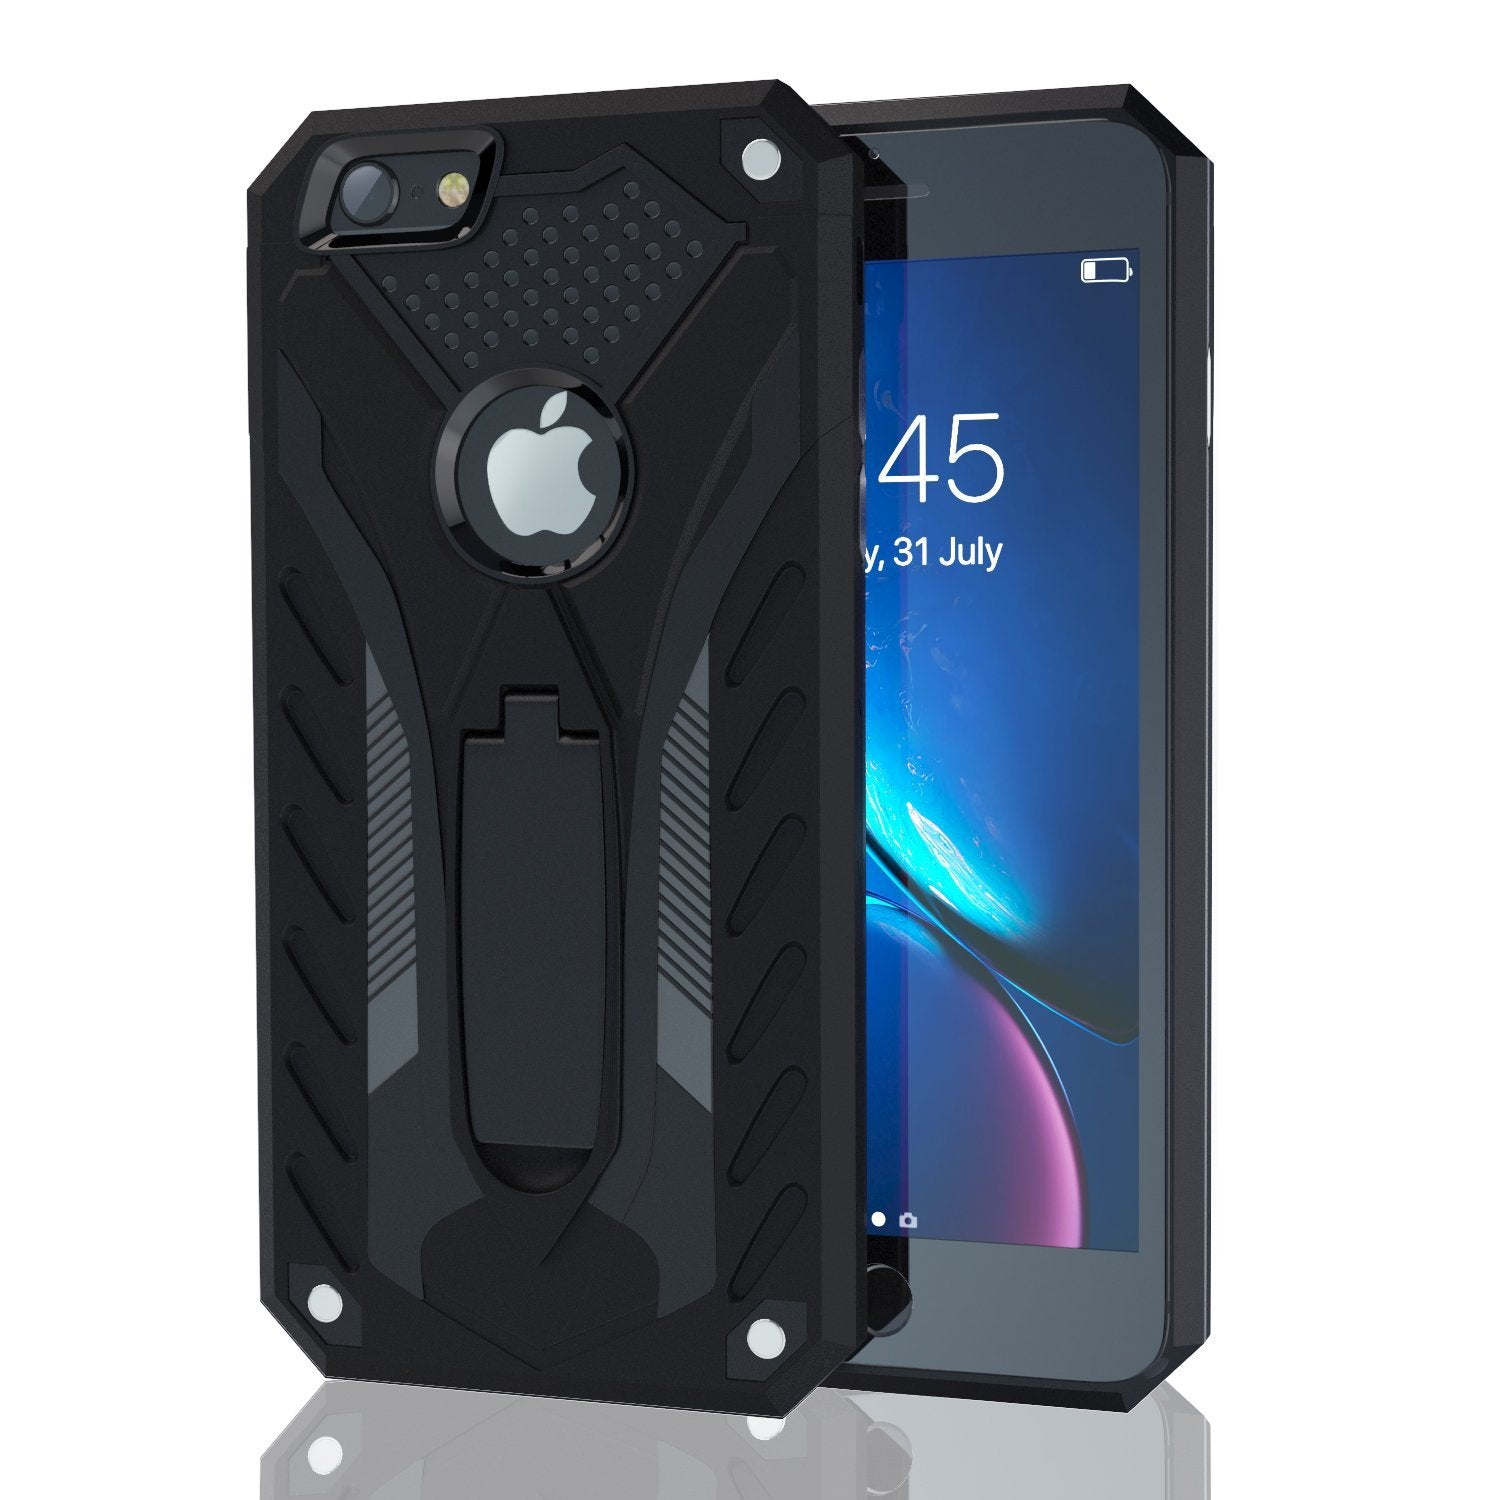 iPhone 6 Plus / iPhone 6s Plus Hard Case with Kickstand Black